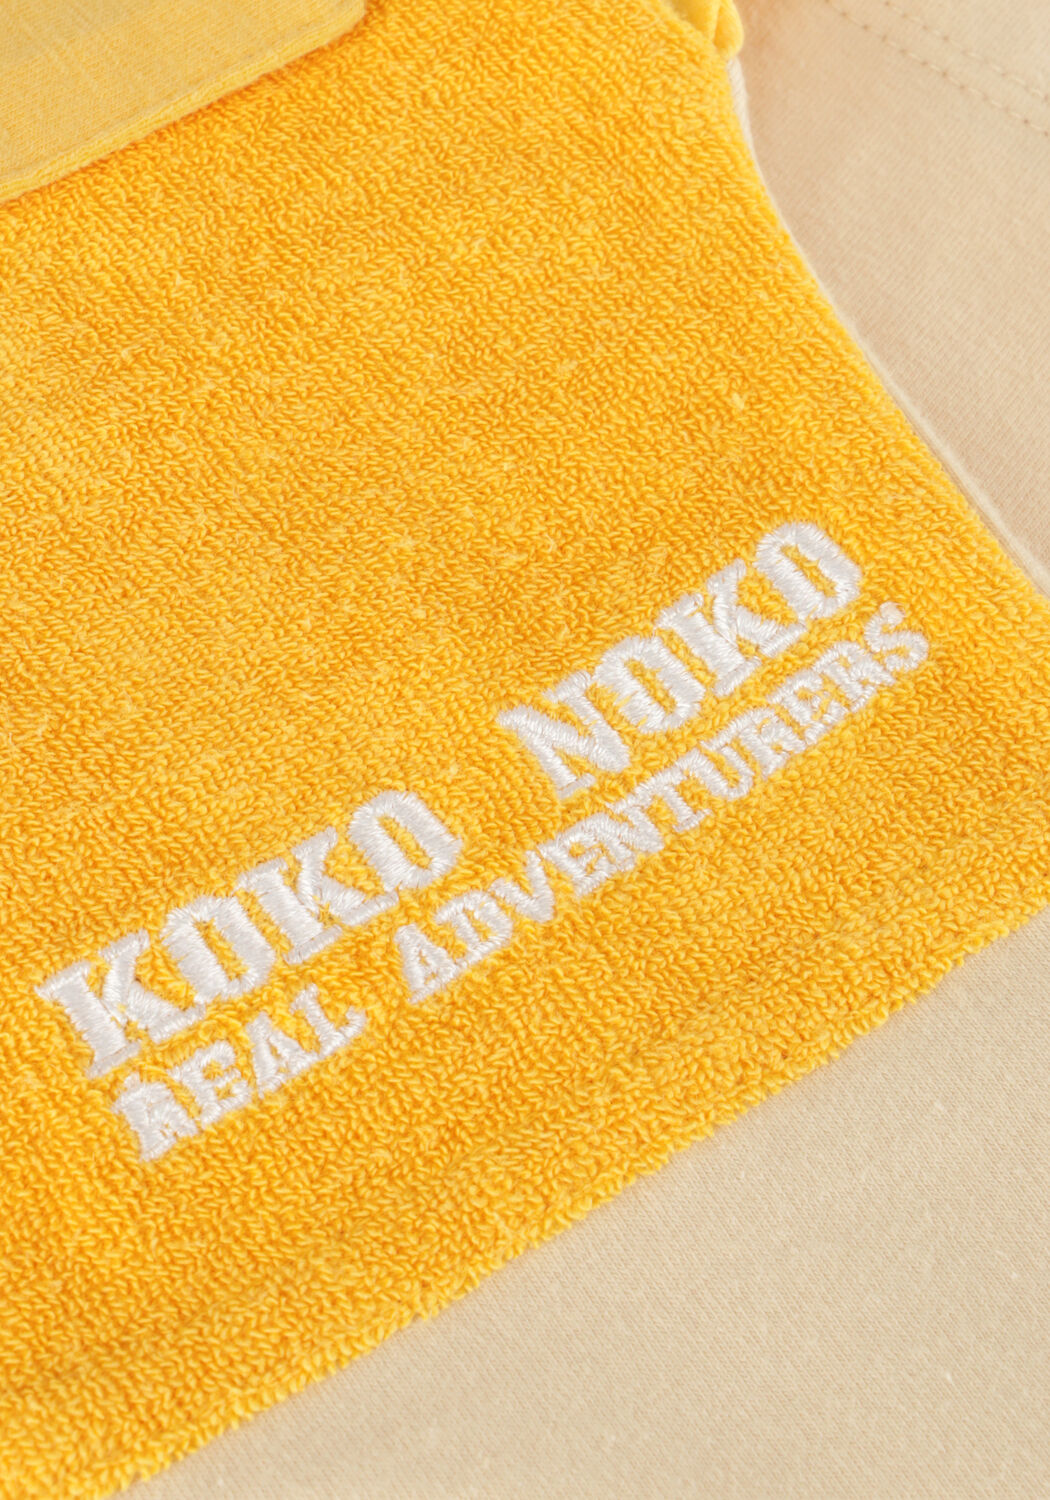 KOKO NOKO Jongens Polo's & T-shirts R50860 Ecru